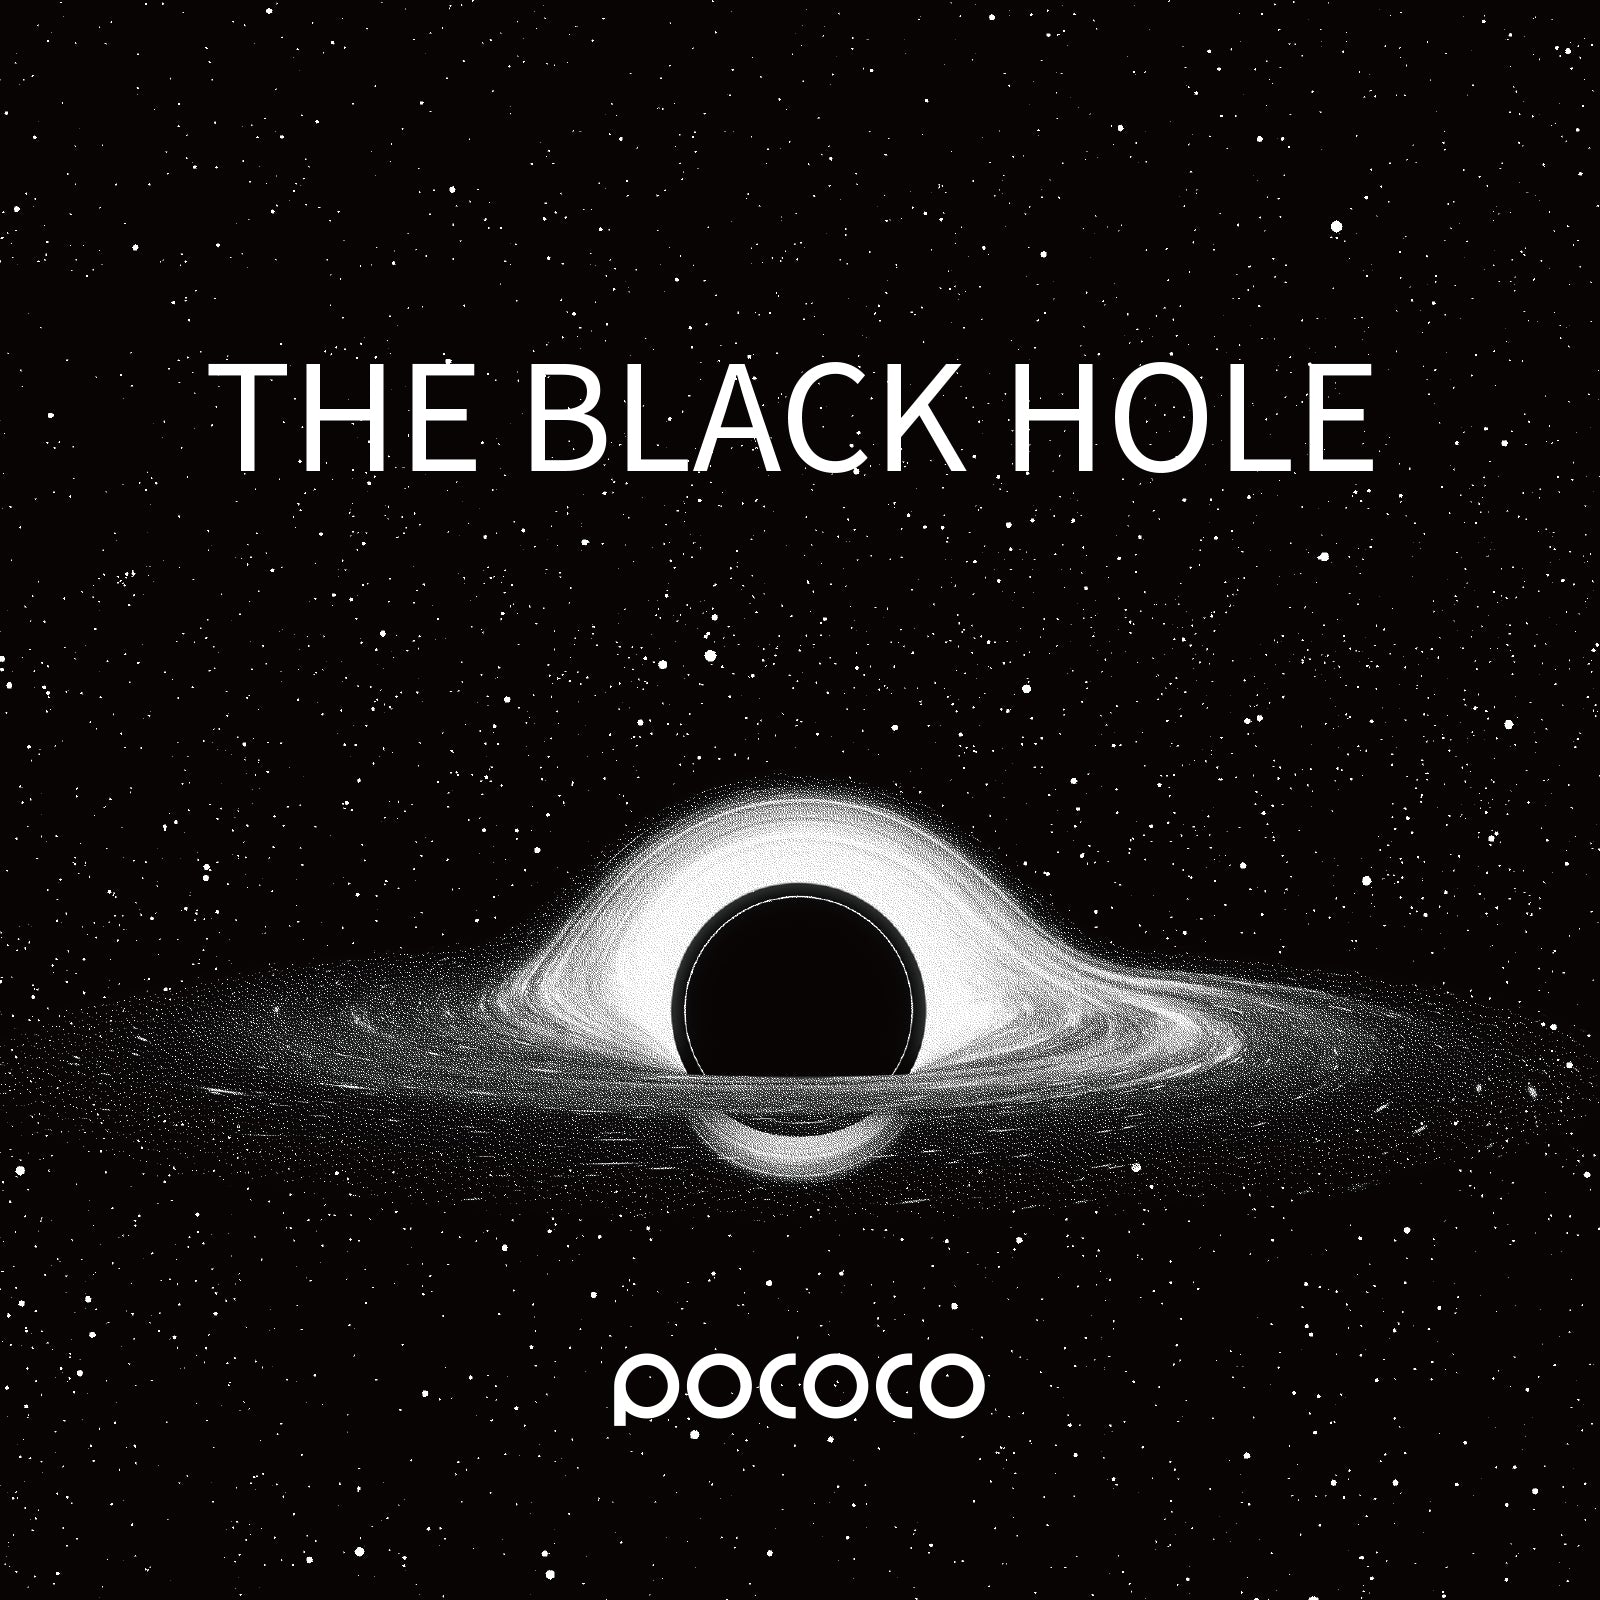 POCOCO Galaxy Projector Disc - The Black Hole